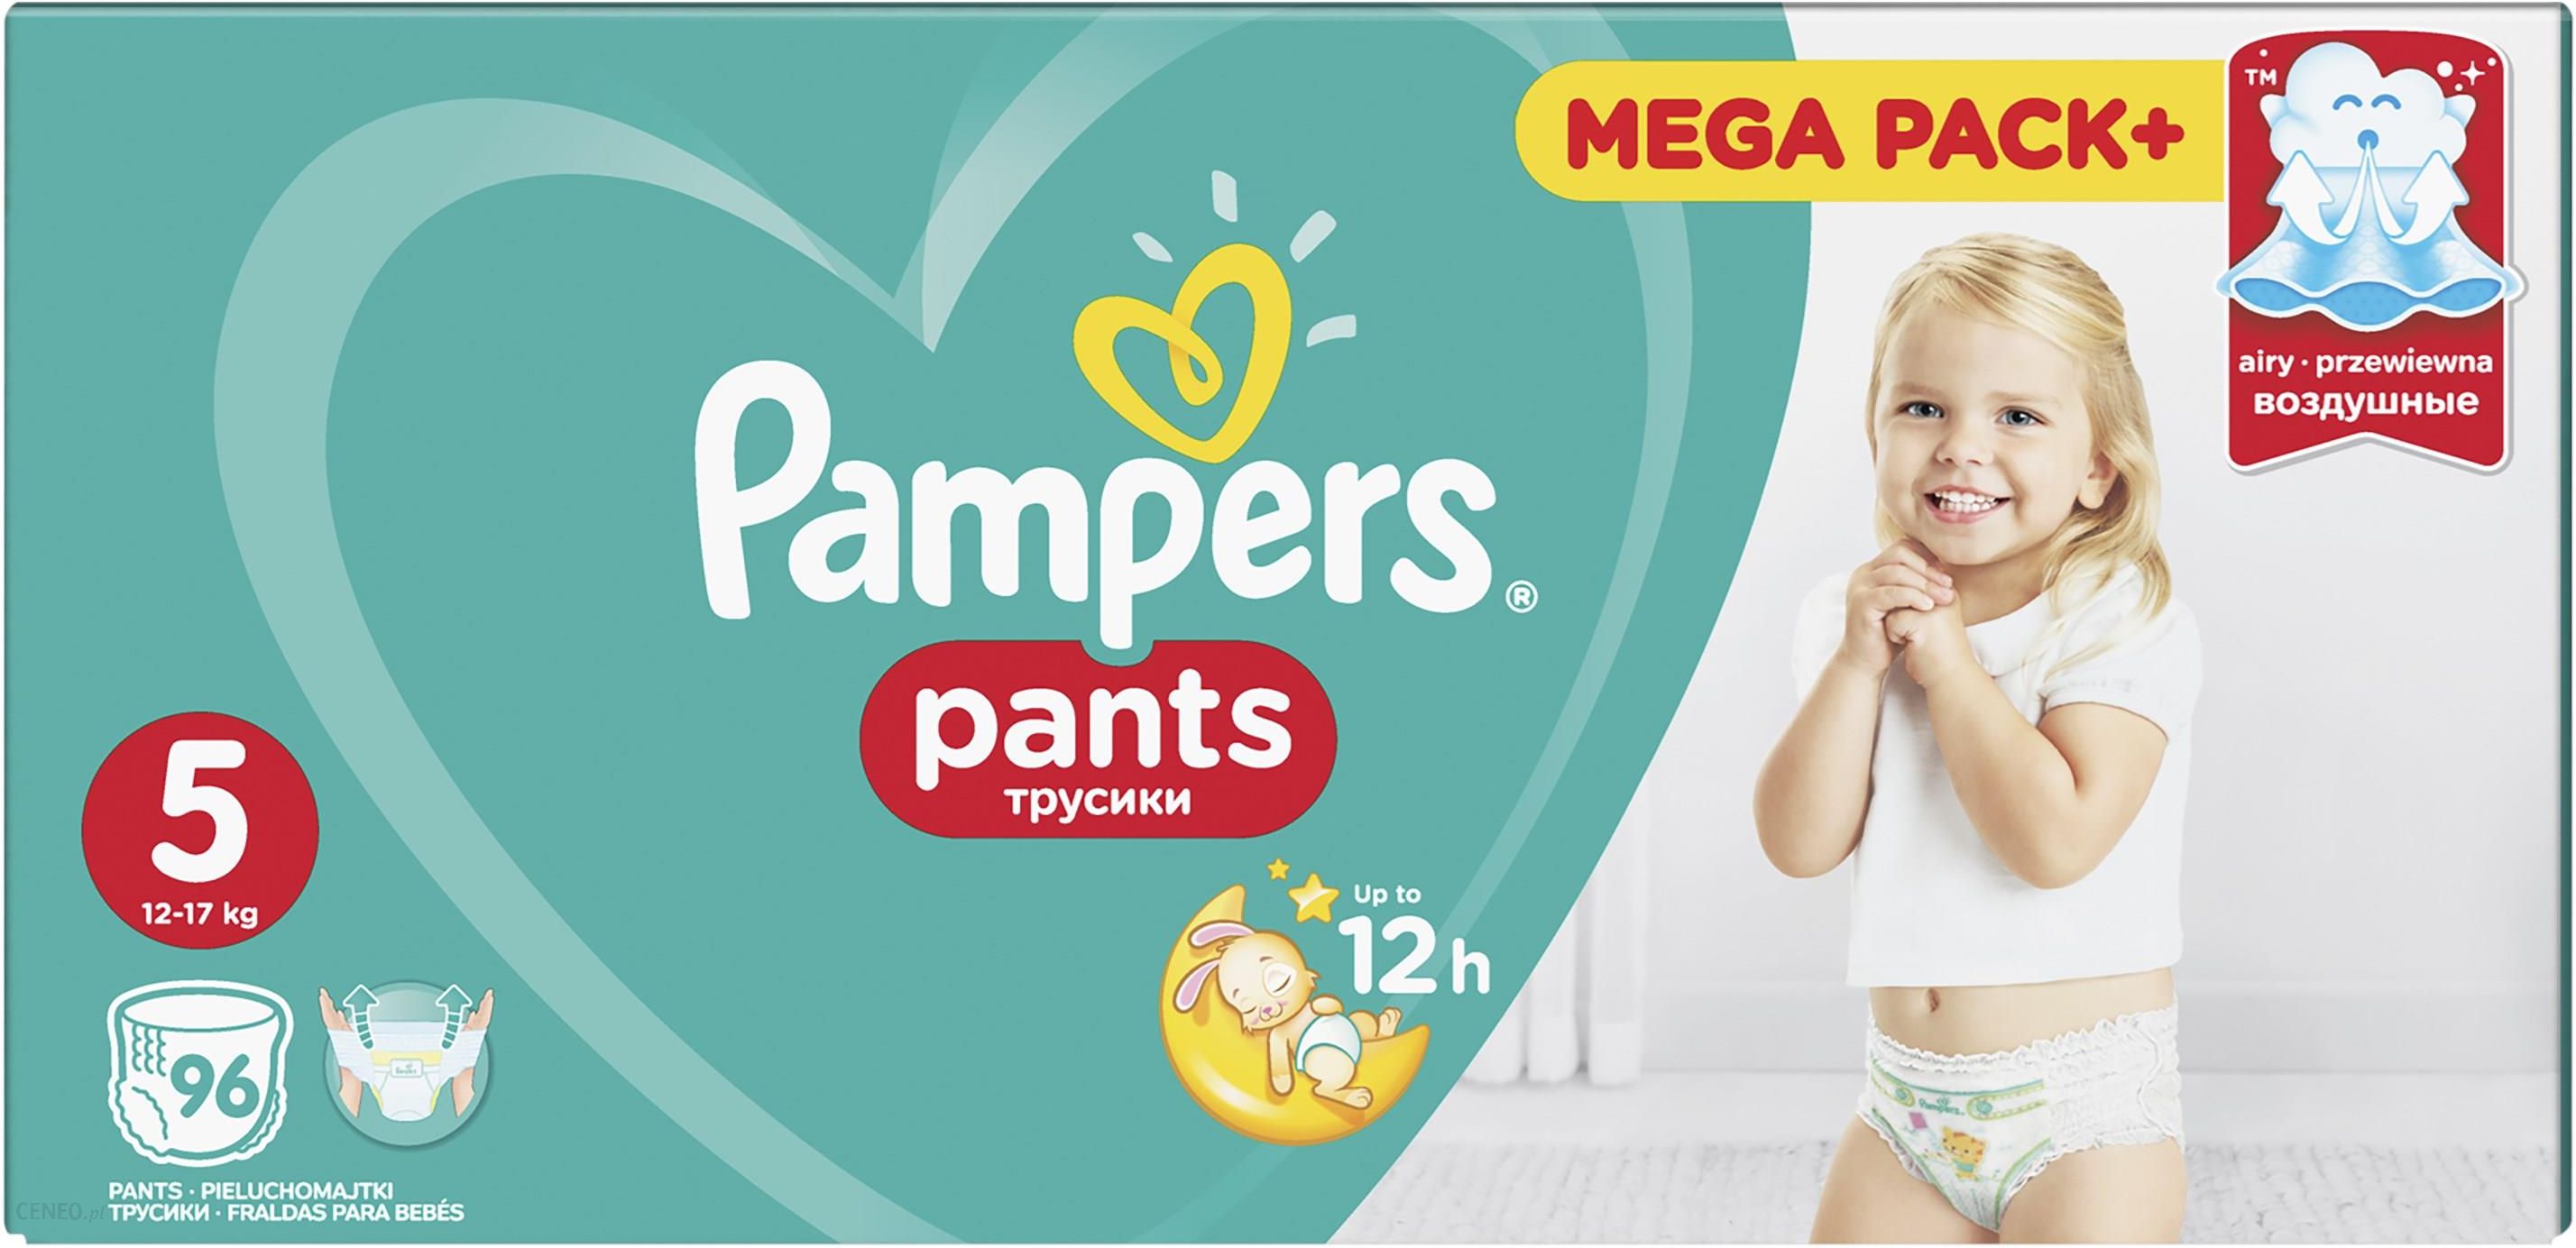 Pampers Pants MB rozmiar 5, 96 pieluszek